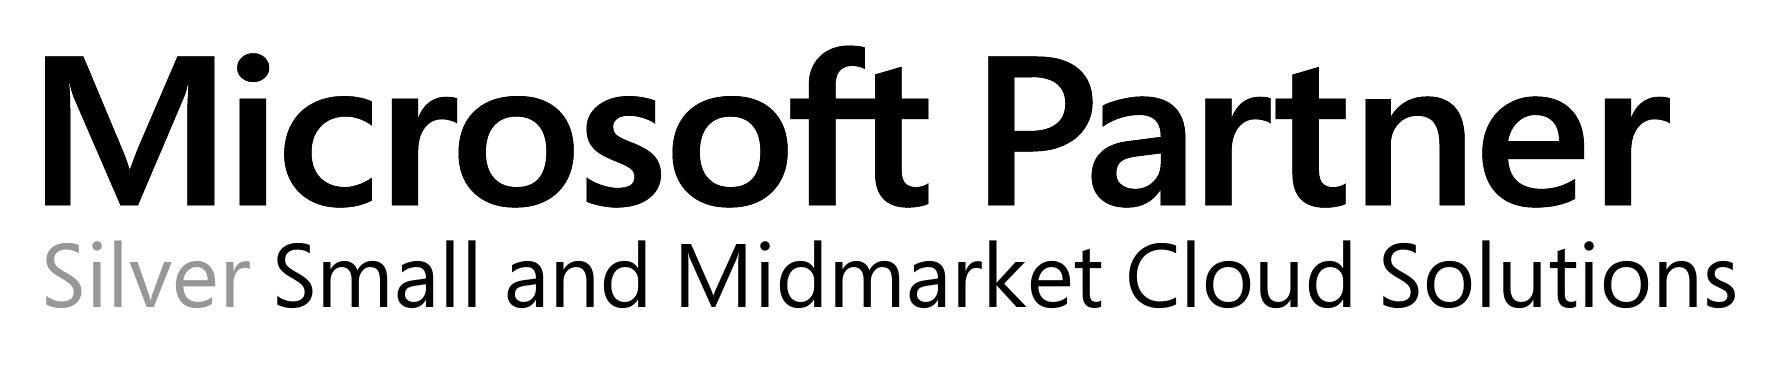 microsoft_silver_small_midmarket_cloud_solution_partner